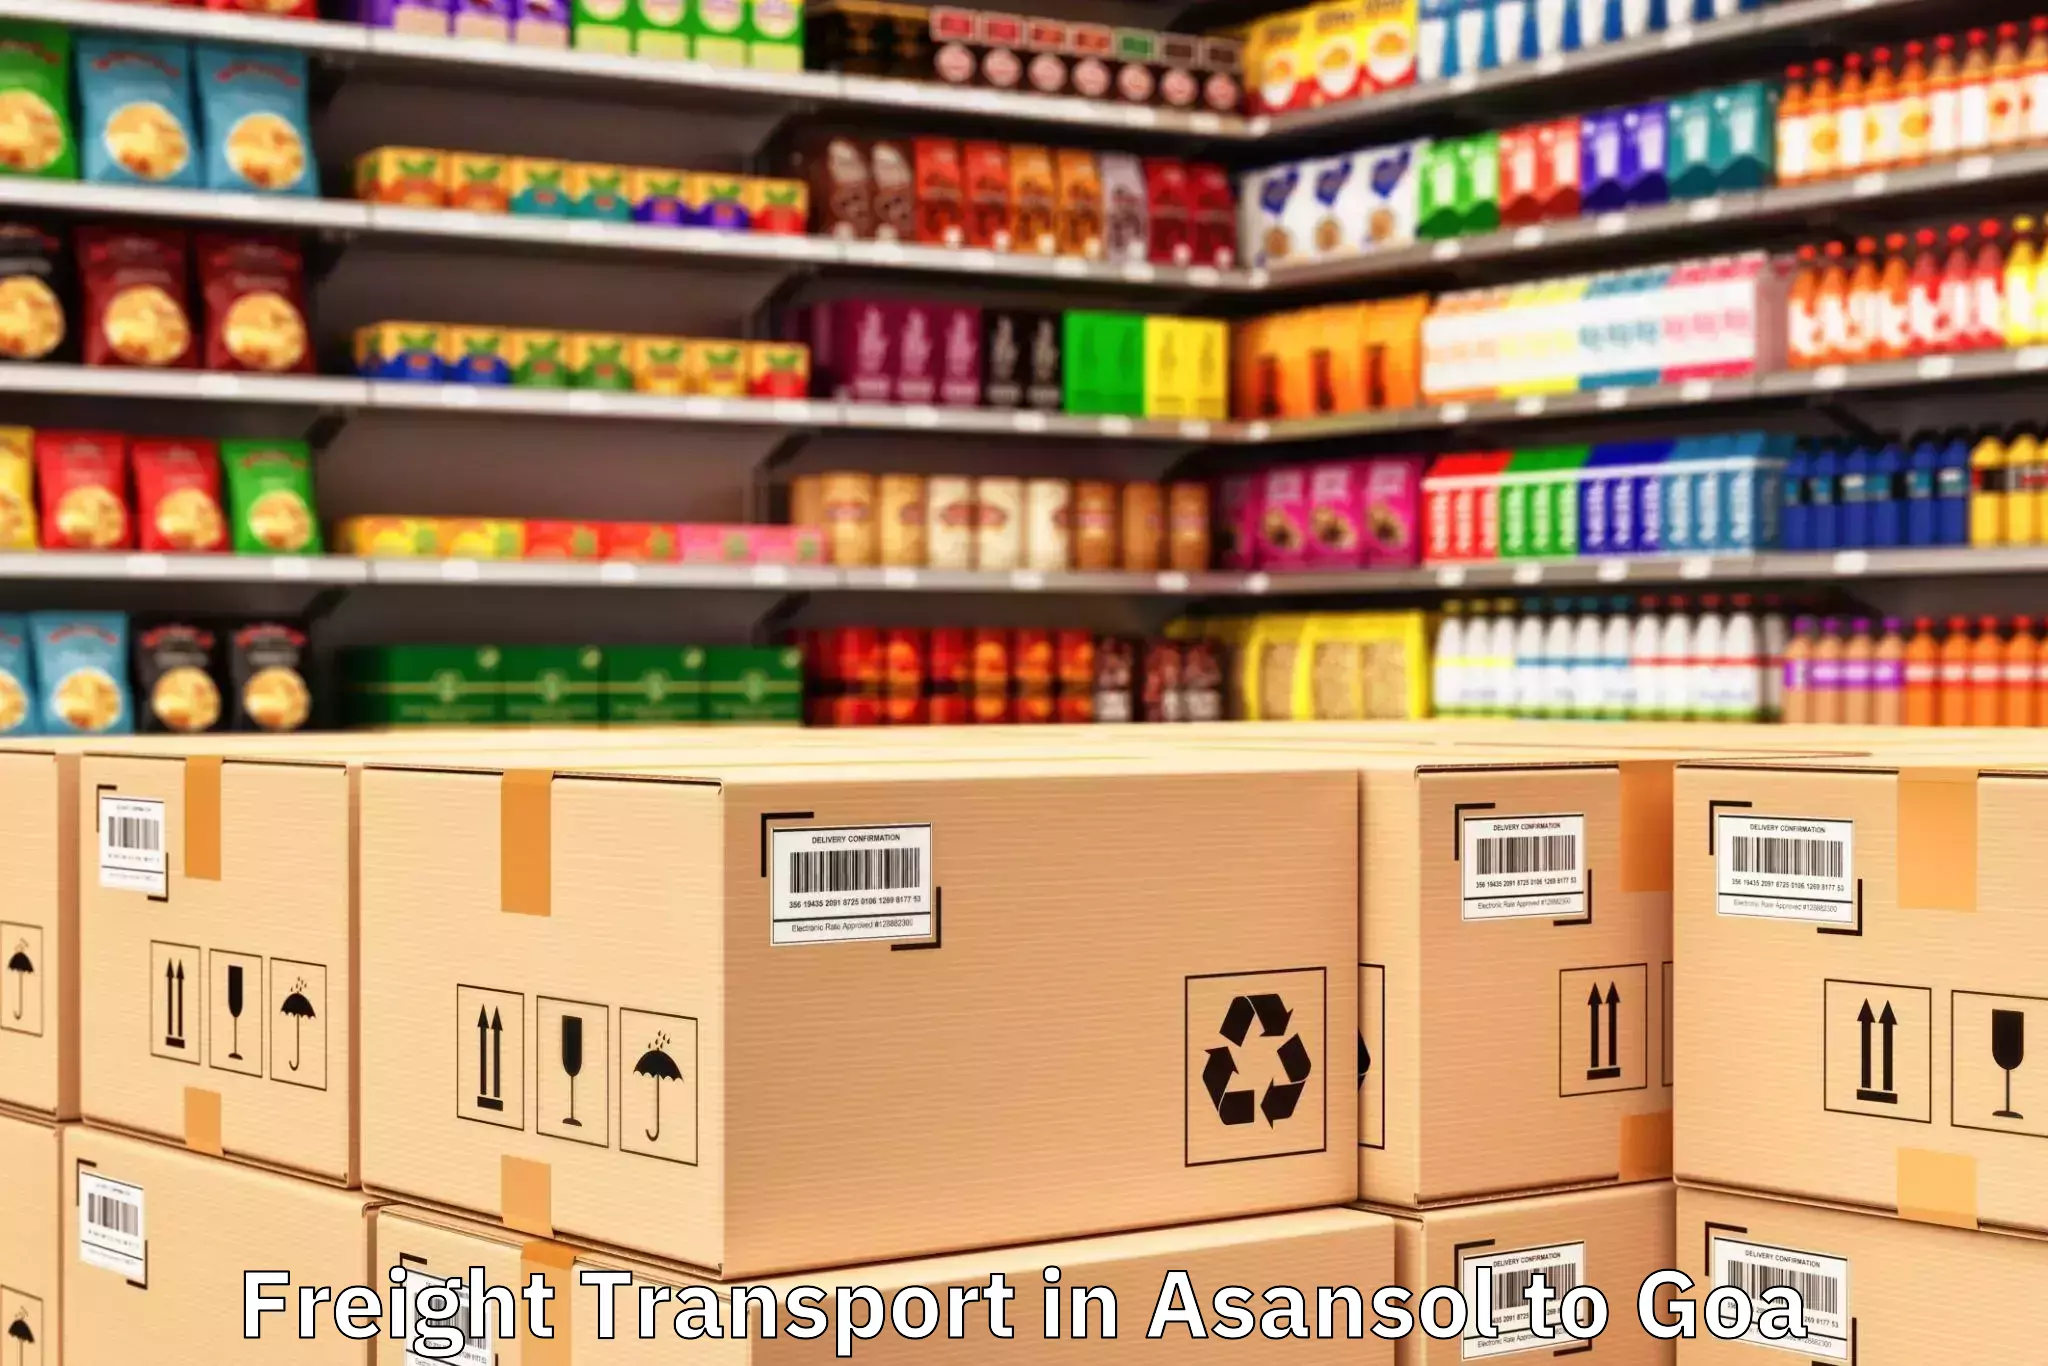 Efficient Asansol to Baga Freight Transport